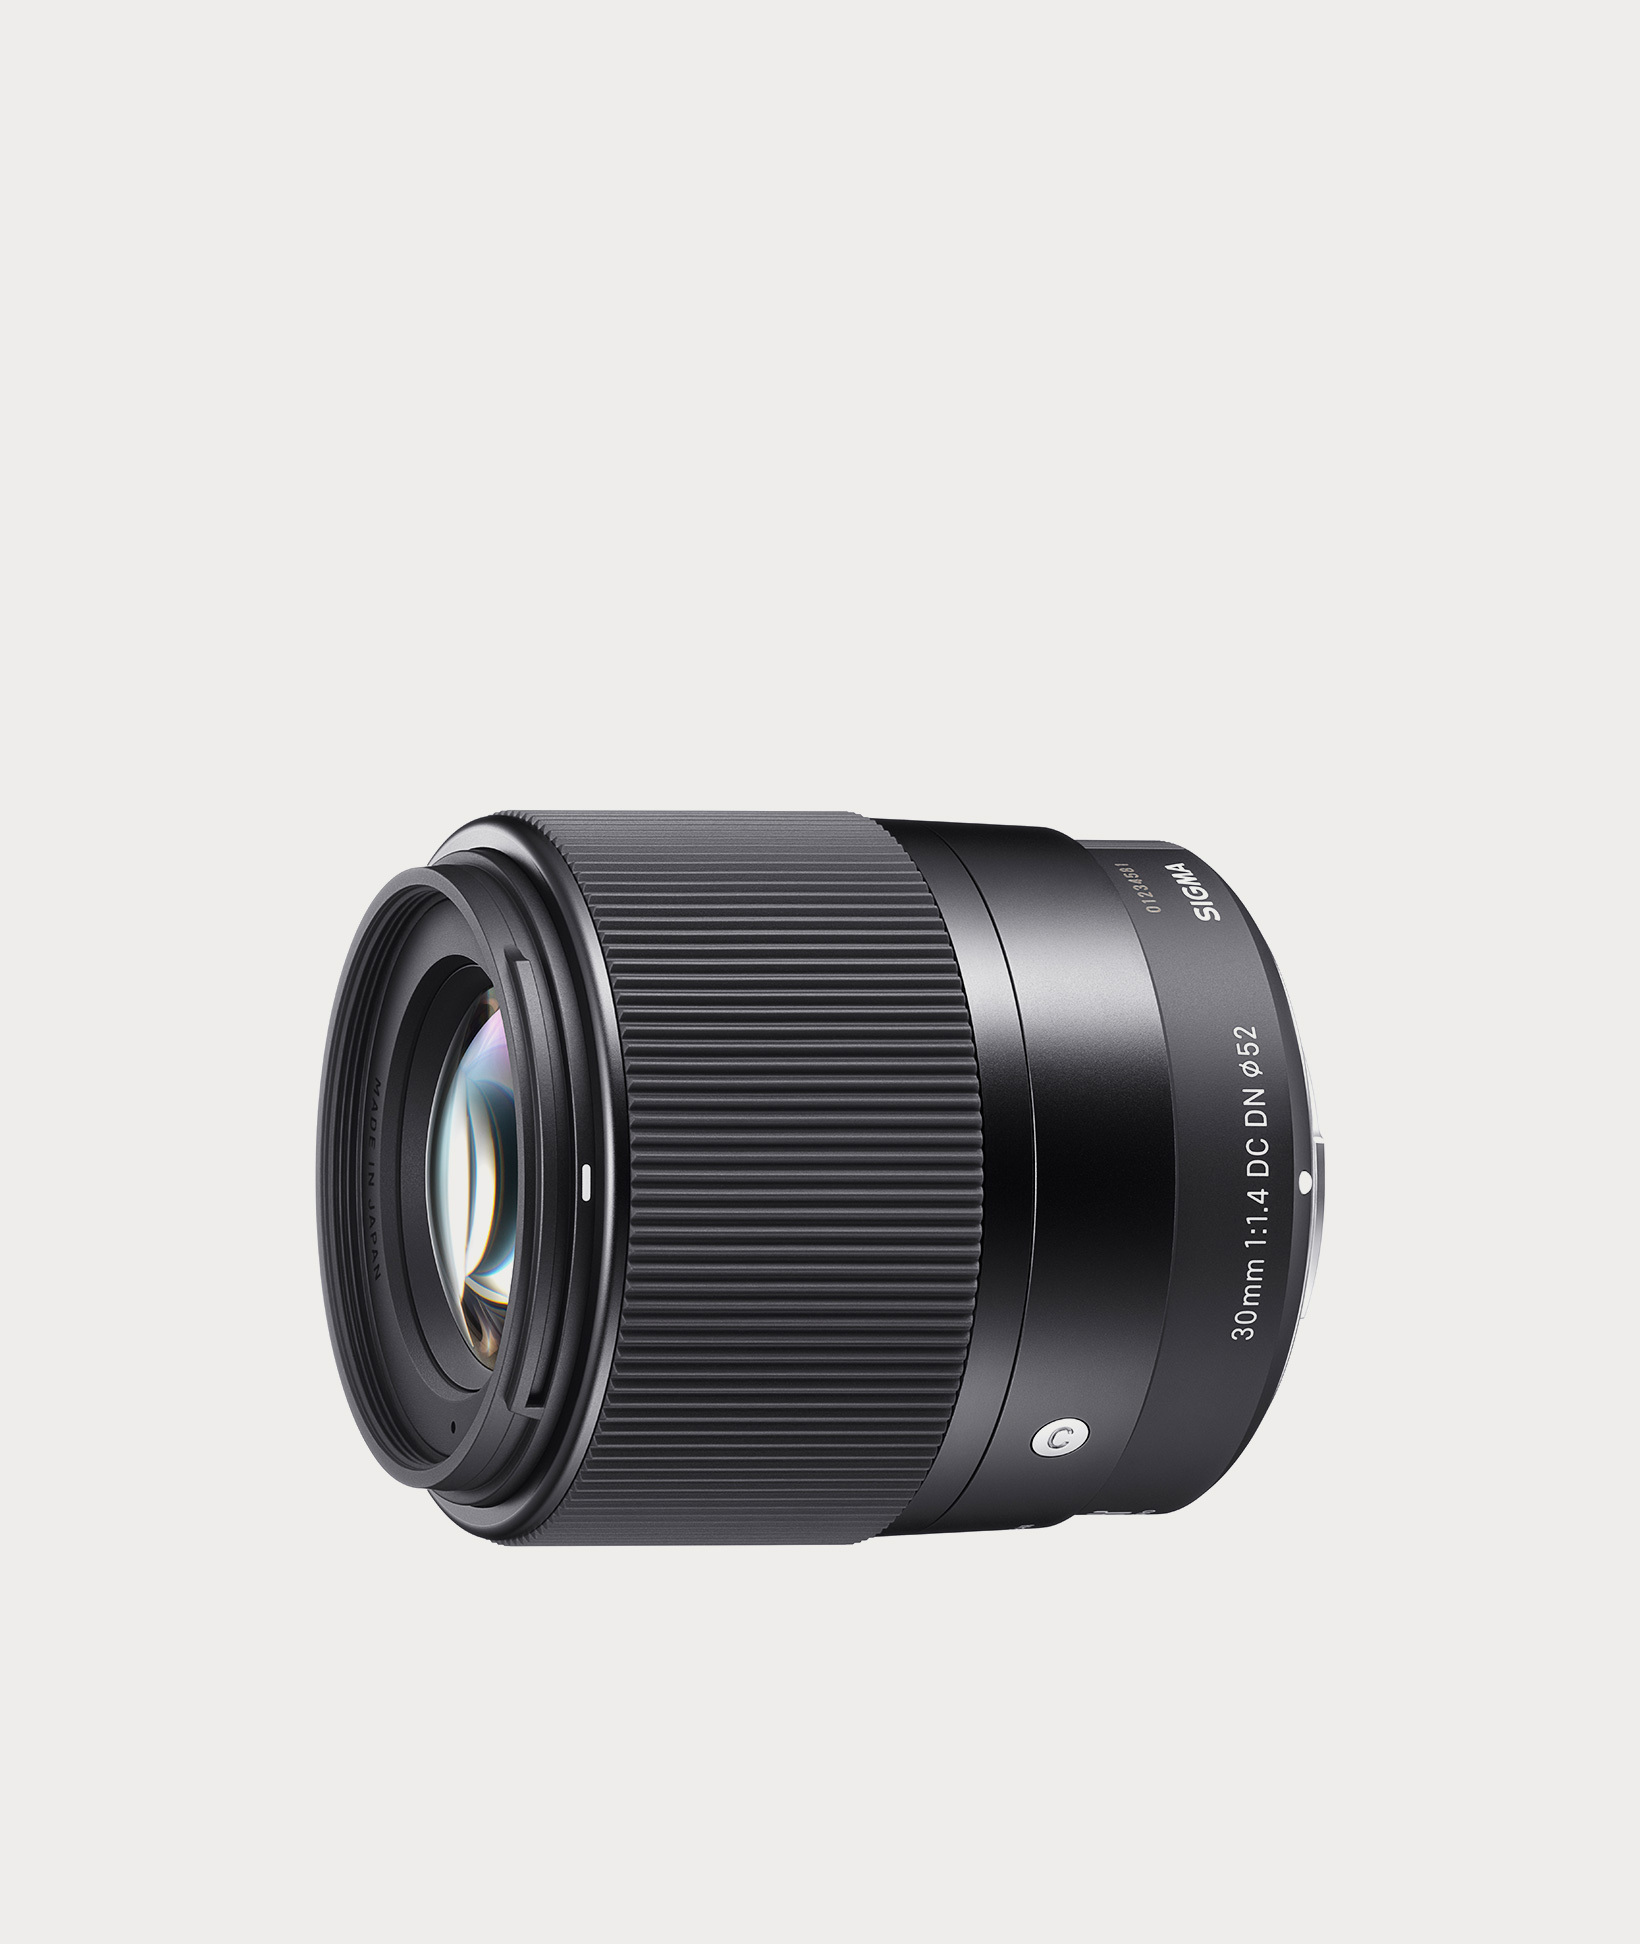 Sigma 30mm F1.4 Contemporary DC DN Lens - Sony E Mount (302965)